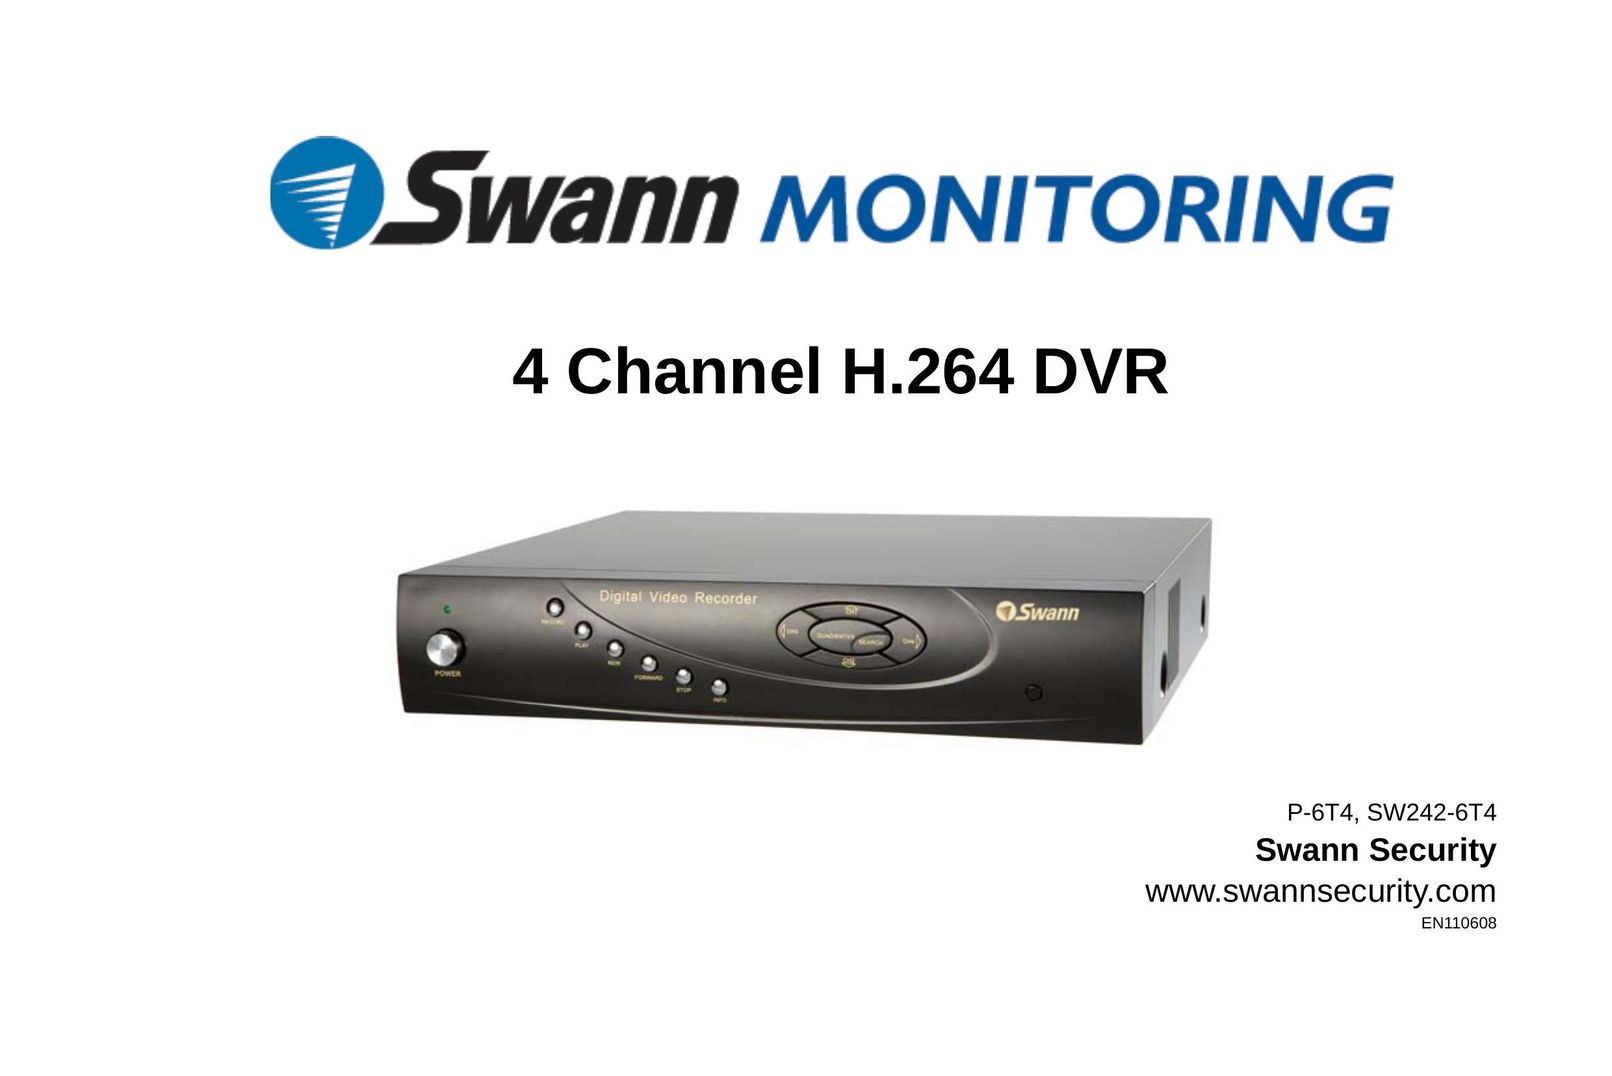 Swann SW242-6T4 DVR User Manual